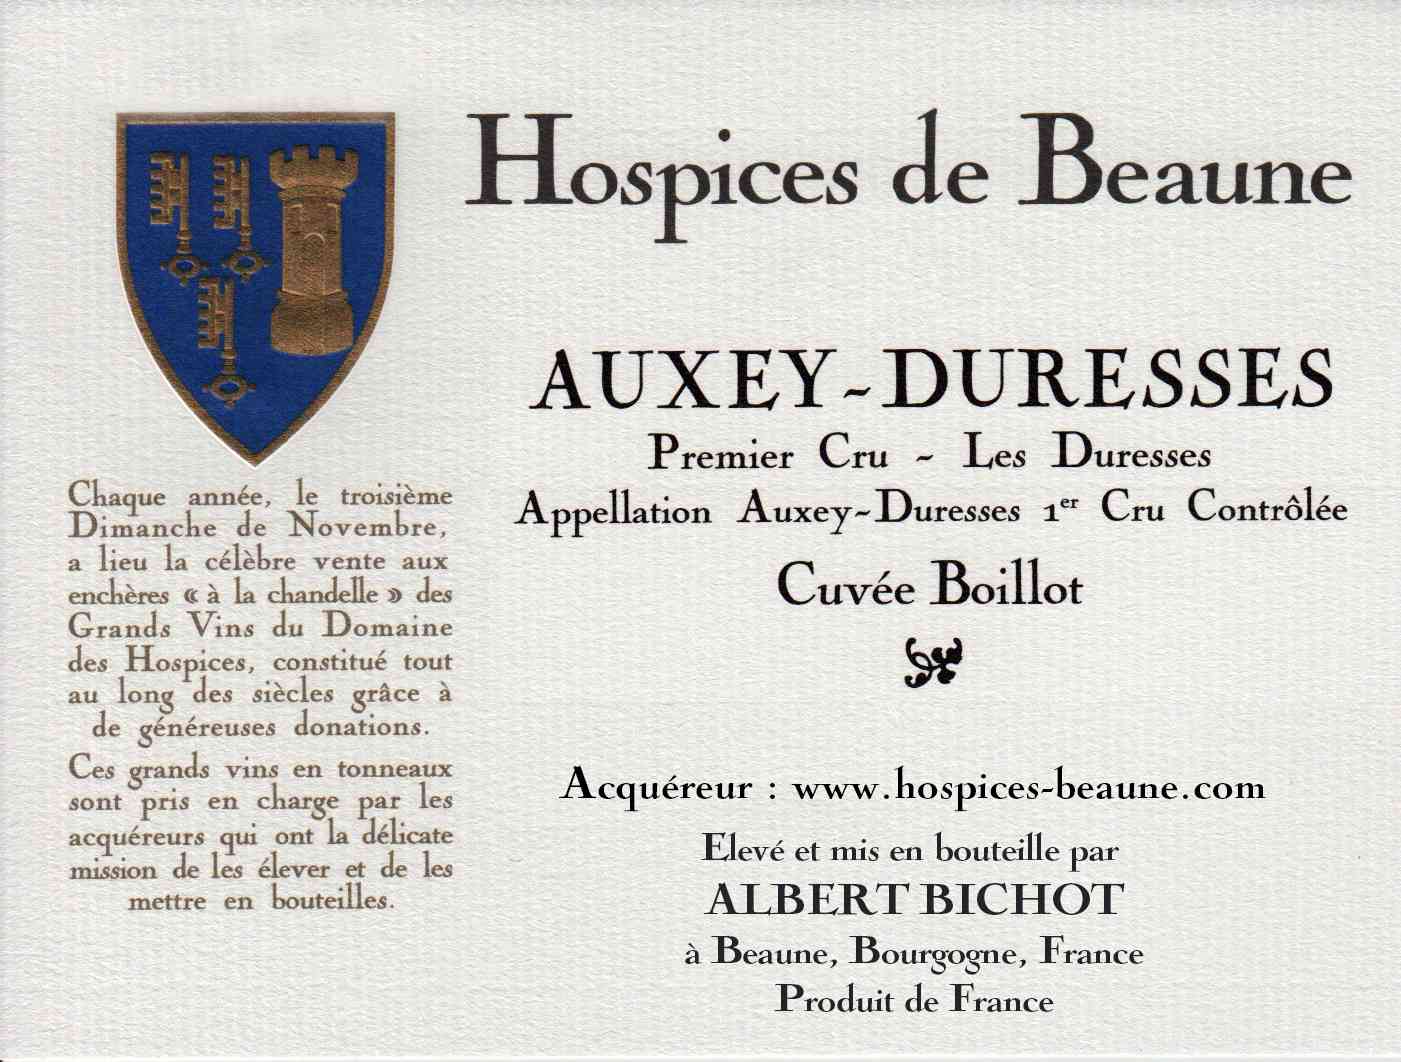 Encheres-auction-HospicesdeBeaune-AlbertBichot-AuxeyDuresses-PremierCru-Cuvee-Boillot